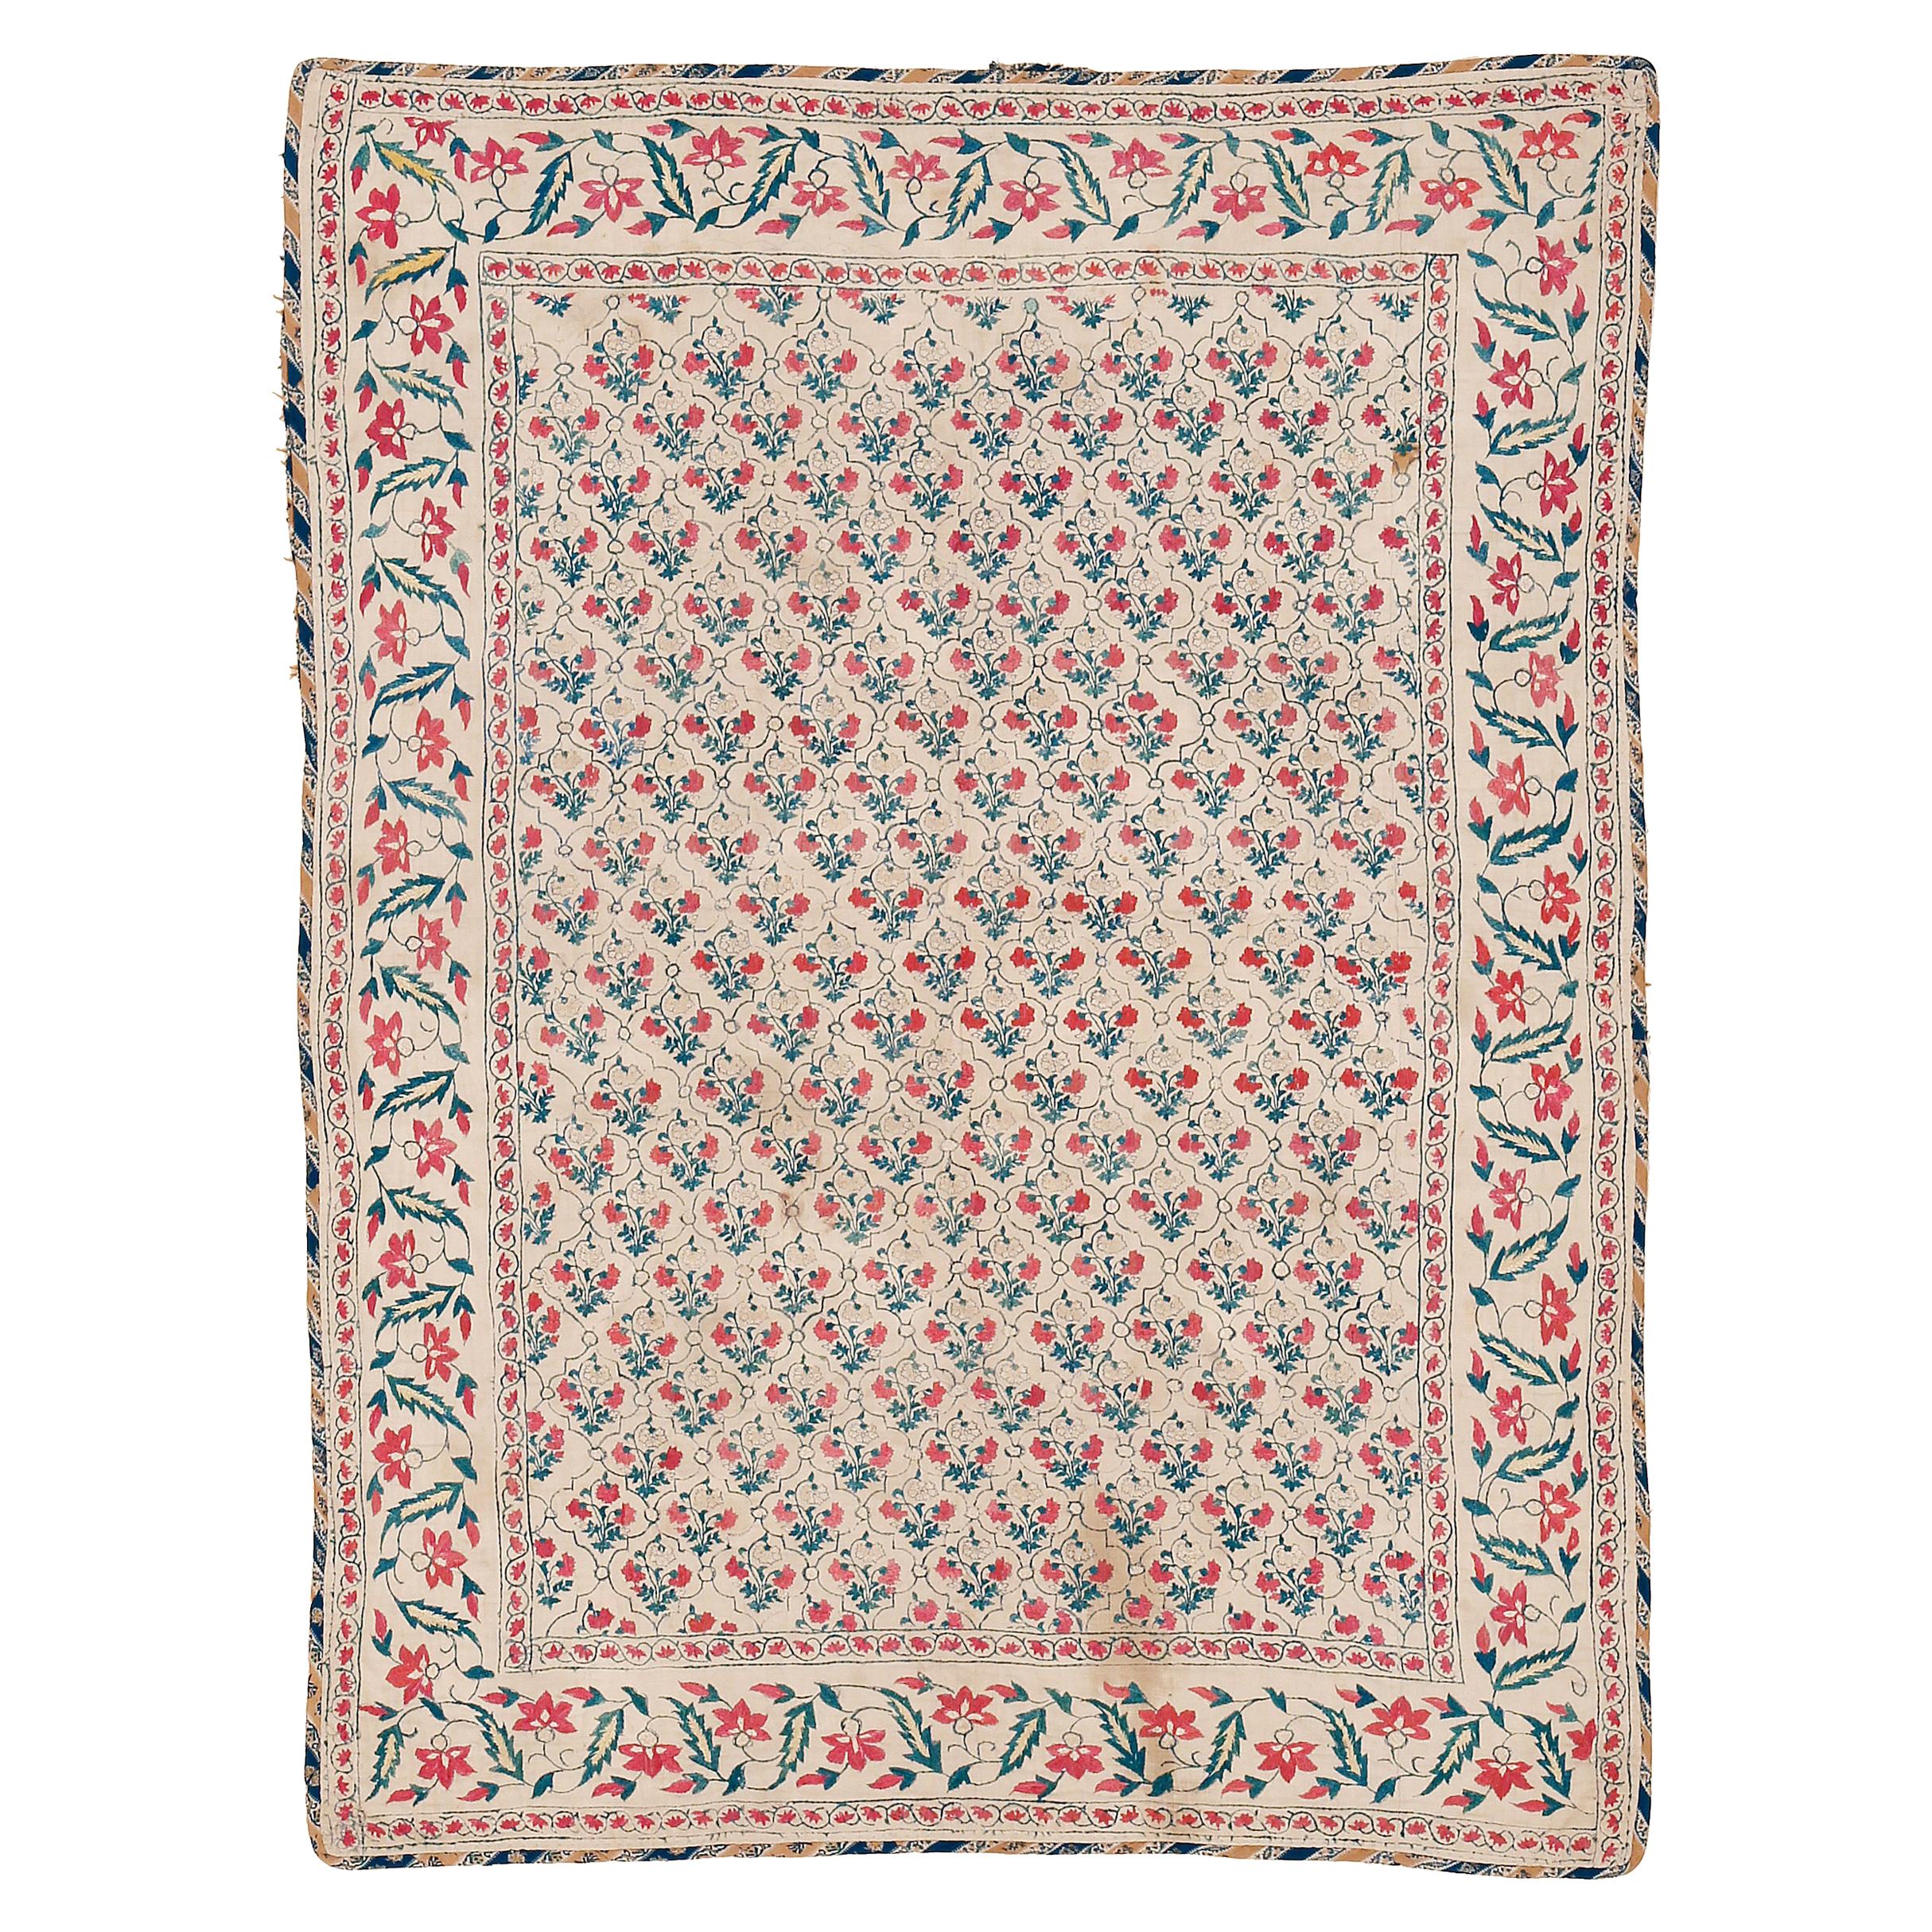 Rare Mughal Dynasty Summer Carpet